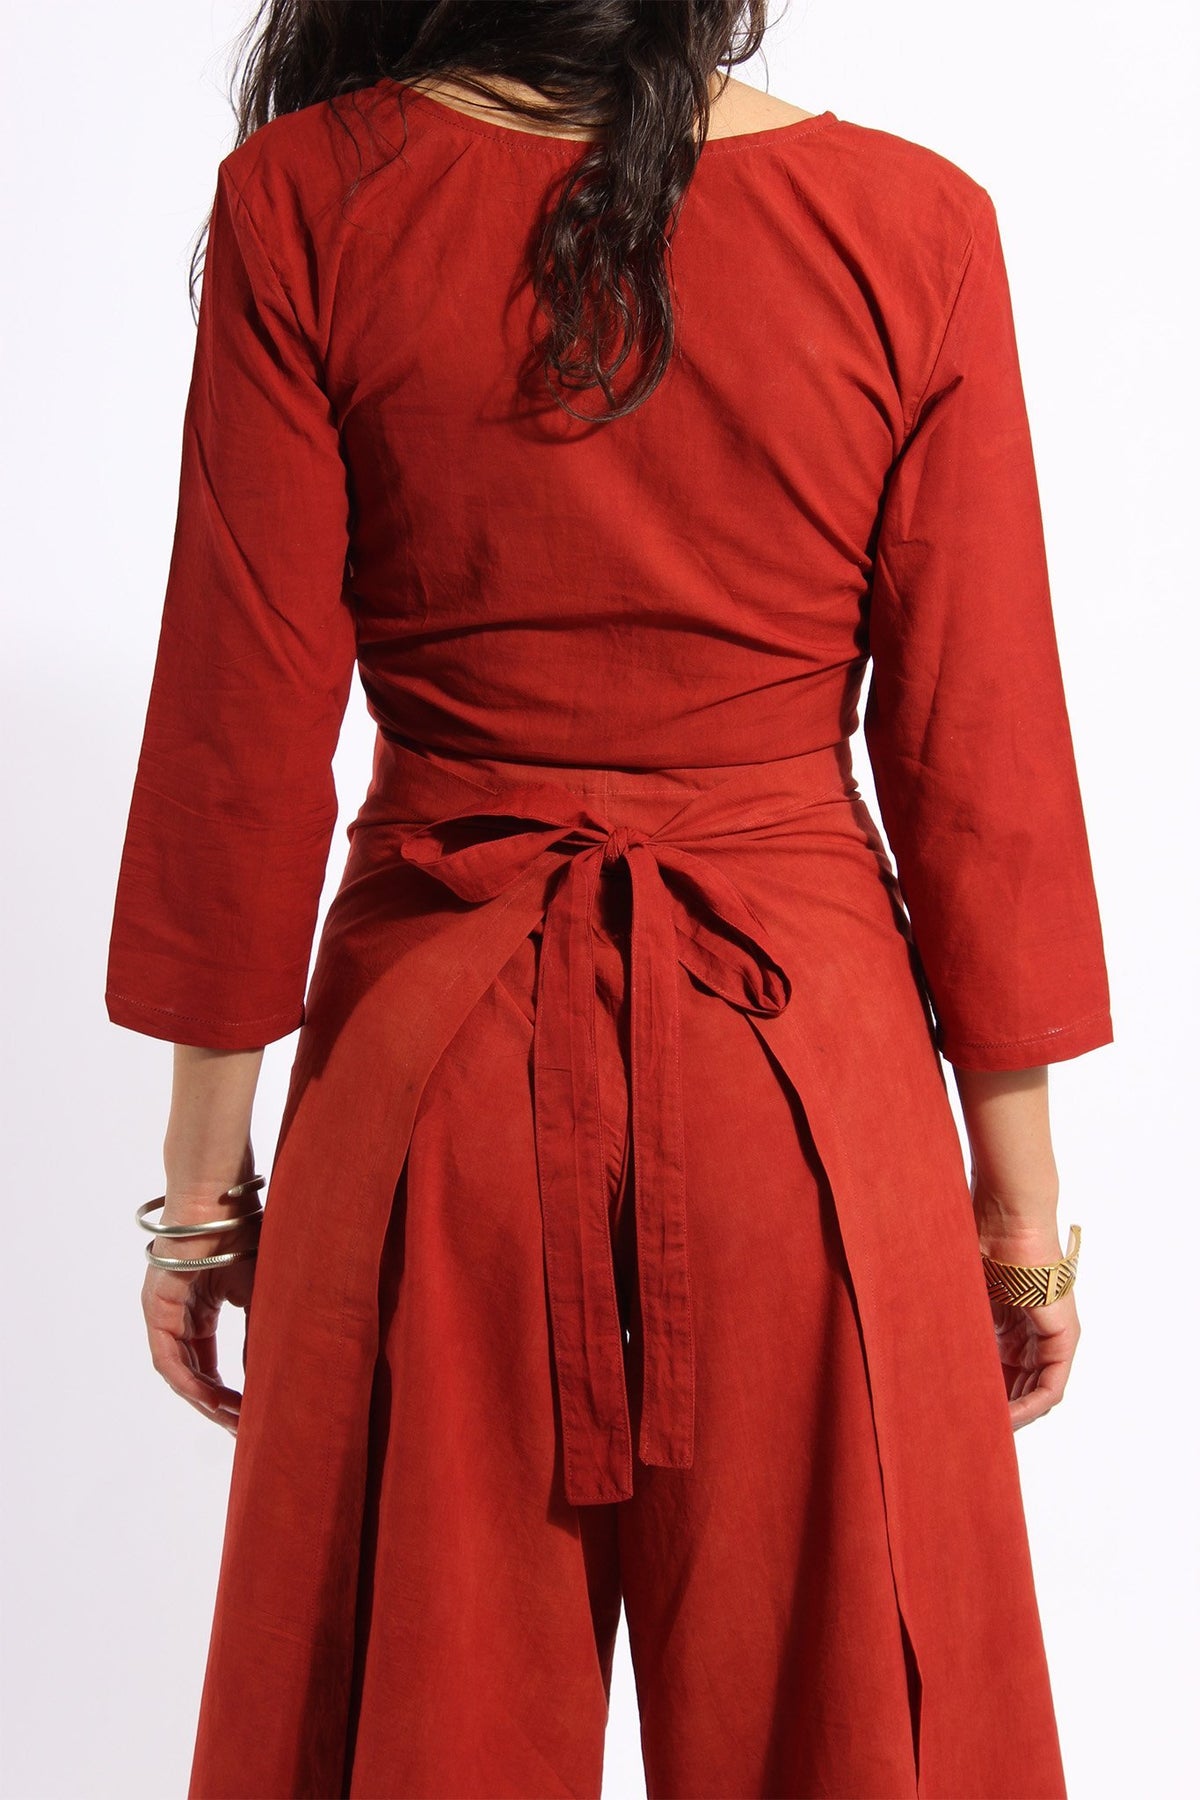 Saraswati Deep Red - Pantalon - Azaadi, la mode responsable accessible